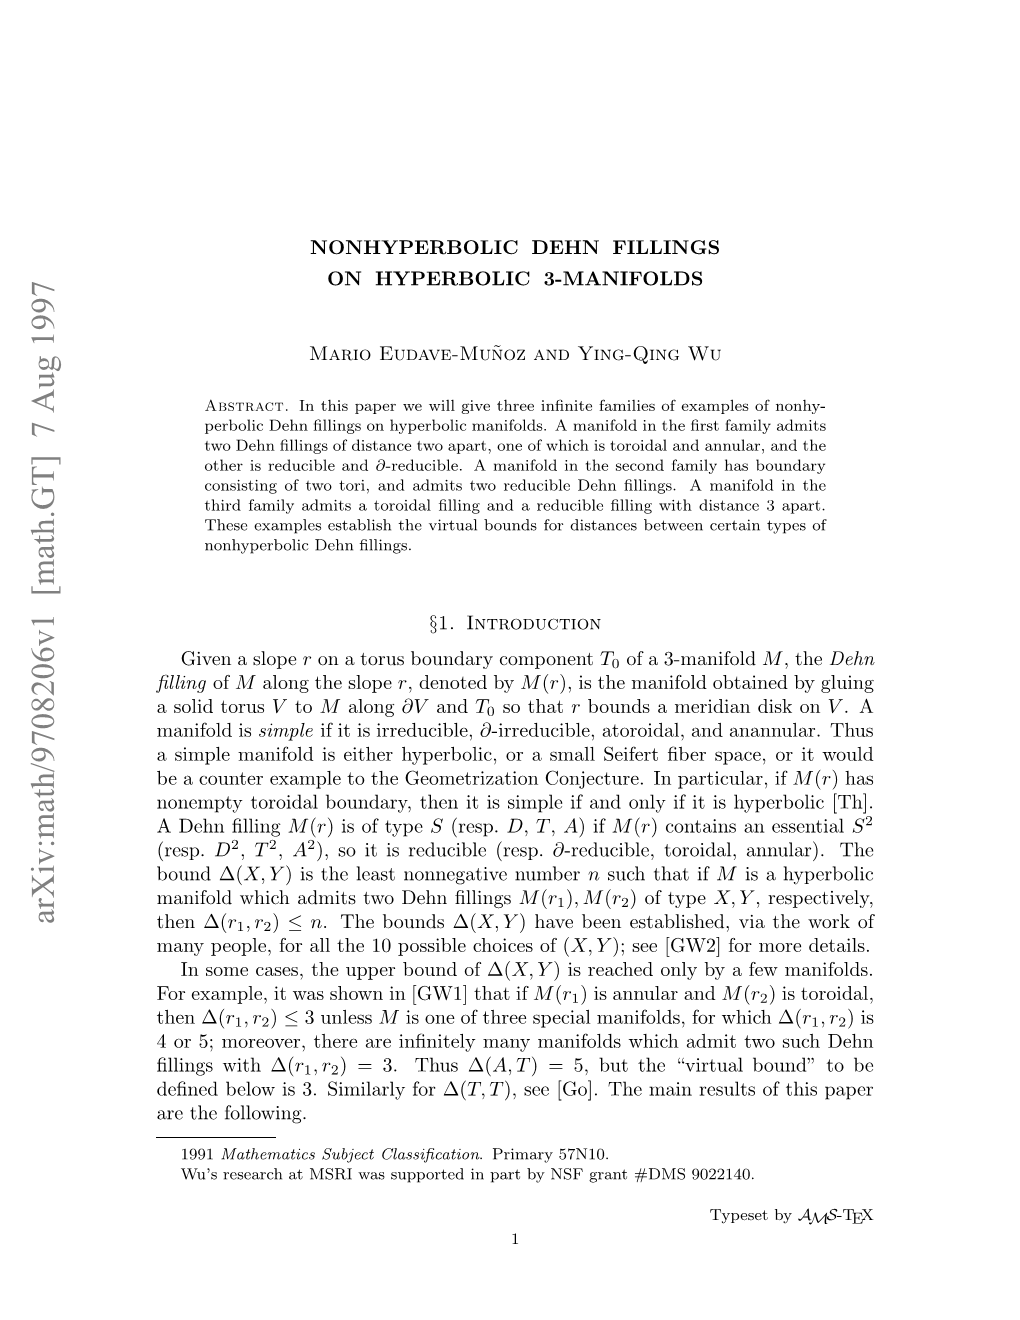 Nonhyperbolic Dehn Fillings on Hyperbolic 3-Manifolds 3